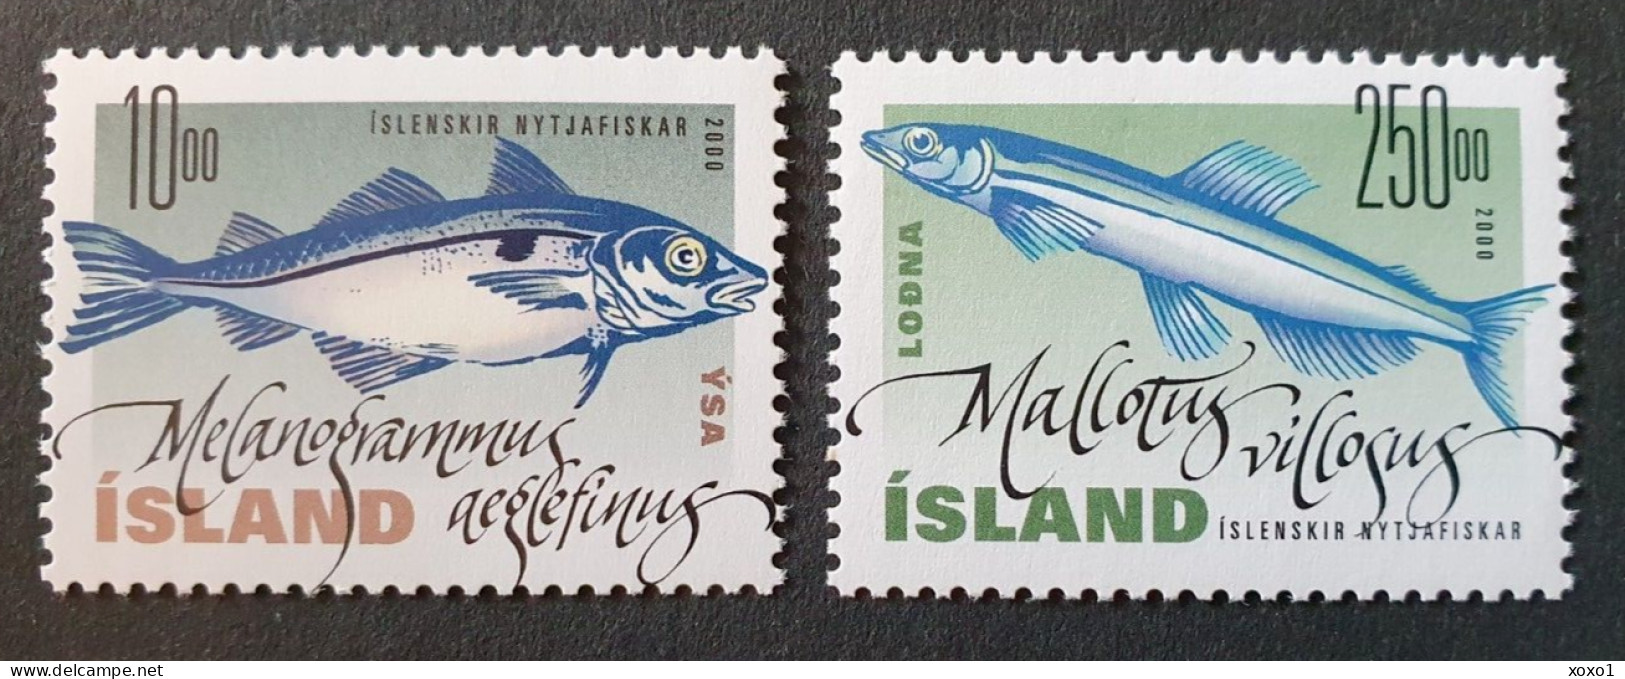 Iceland 2000 MiNr. 960 - 961 Island  Marine Life, Fishes - III  2v  MNH**  8.00 € - Peces